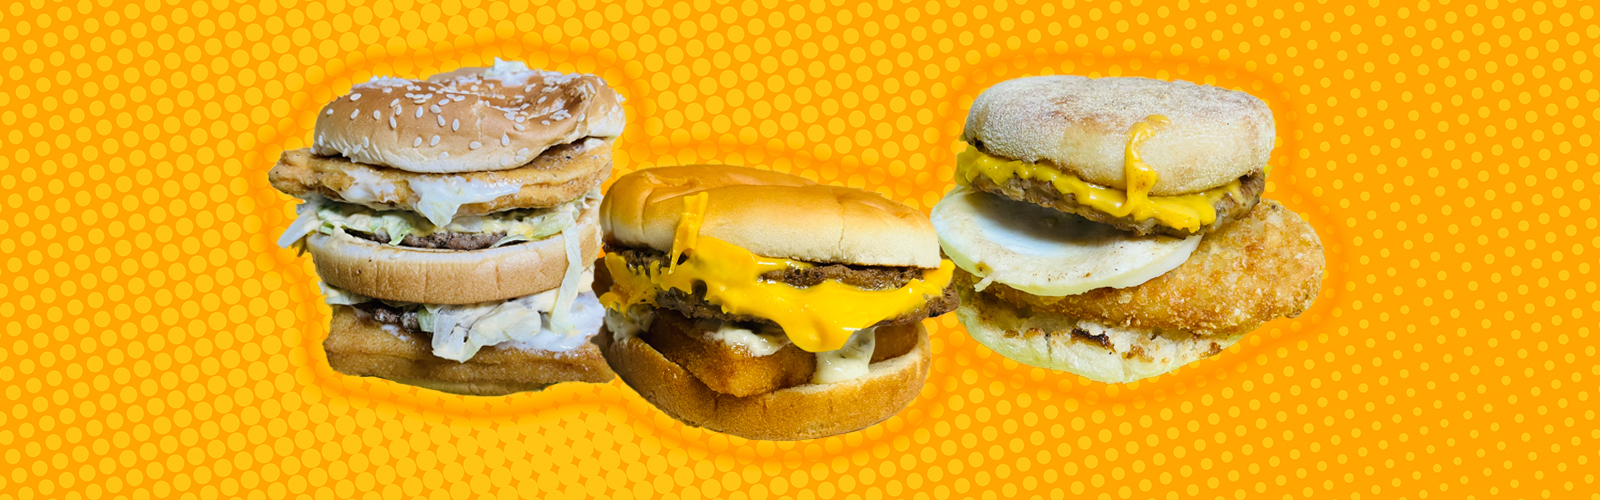 McDonald's to add breakfast items to late-night menu - Las Vegas